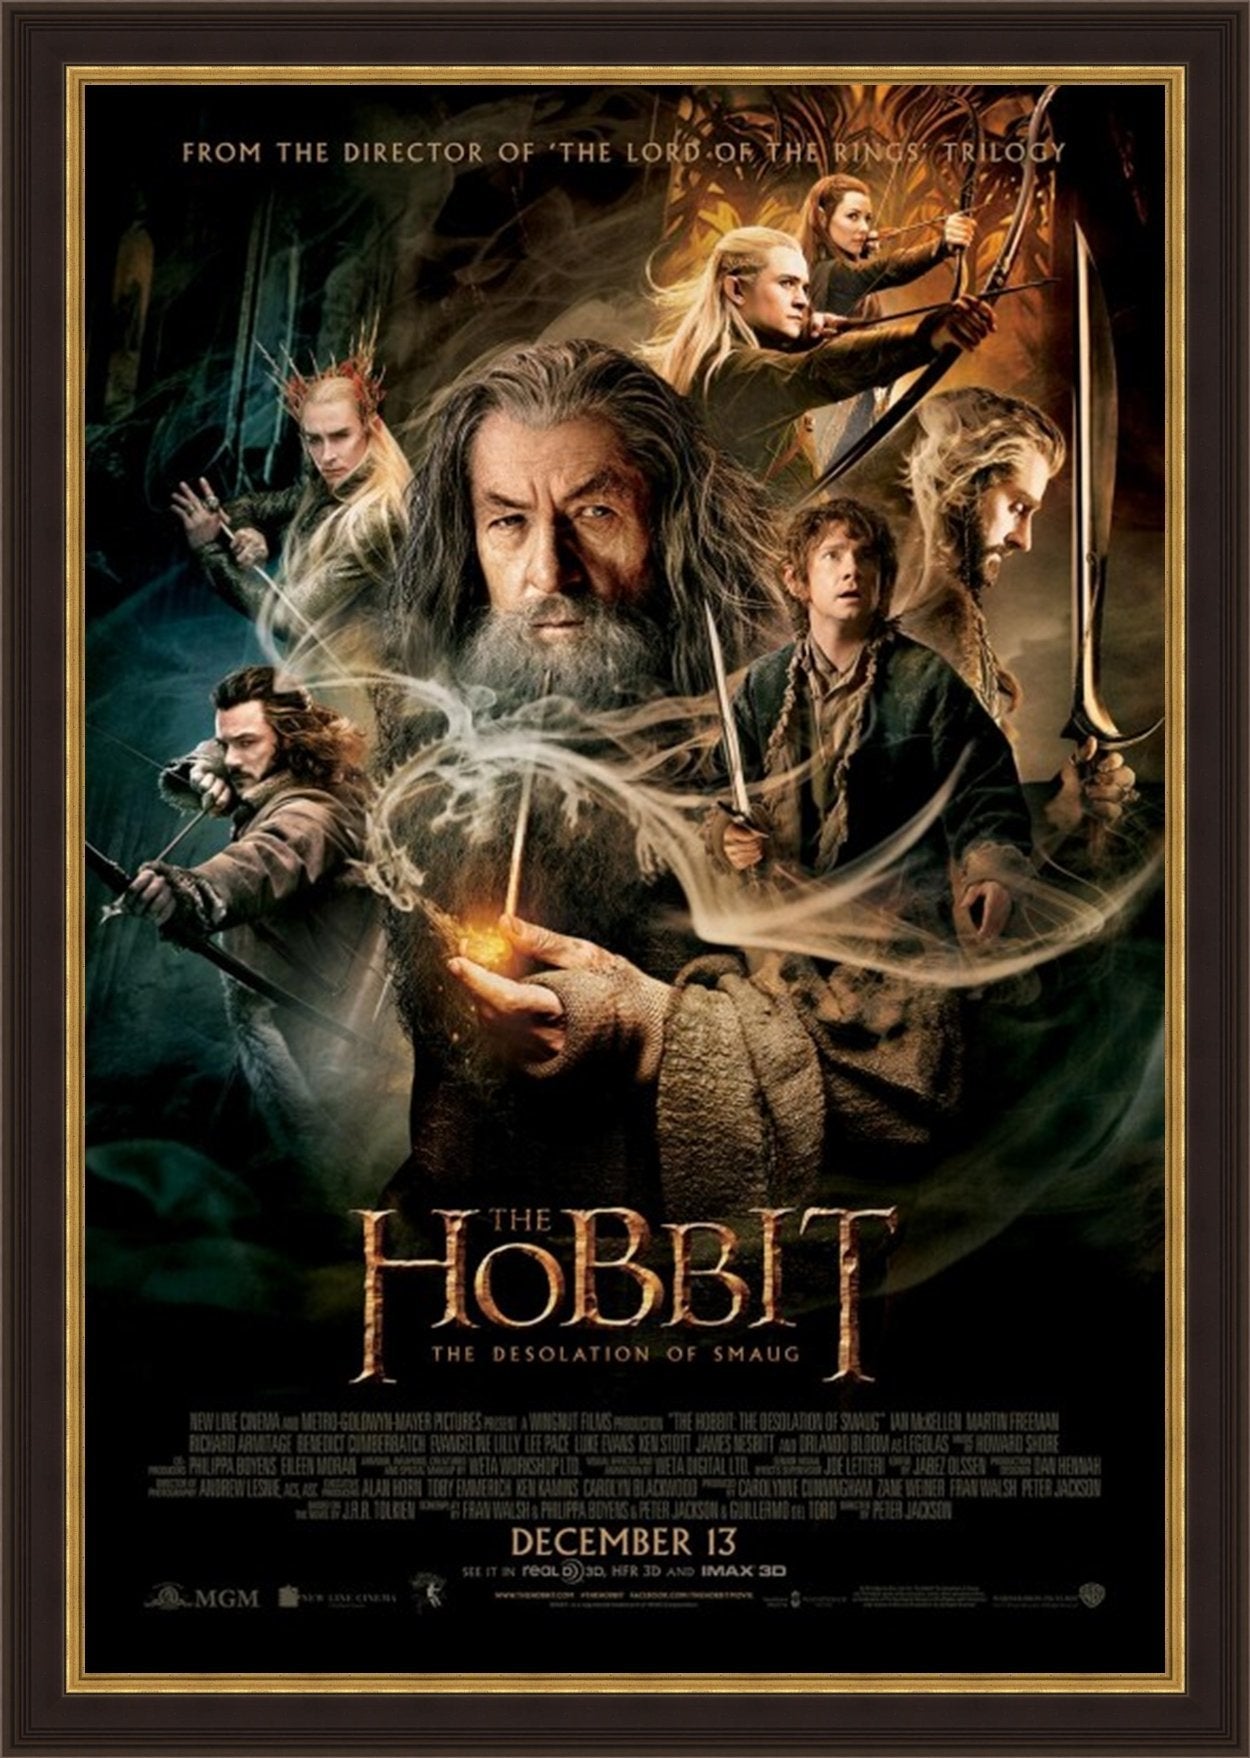 An original movie poster for the film The Hobbit : The Desolation of Smaug